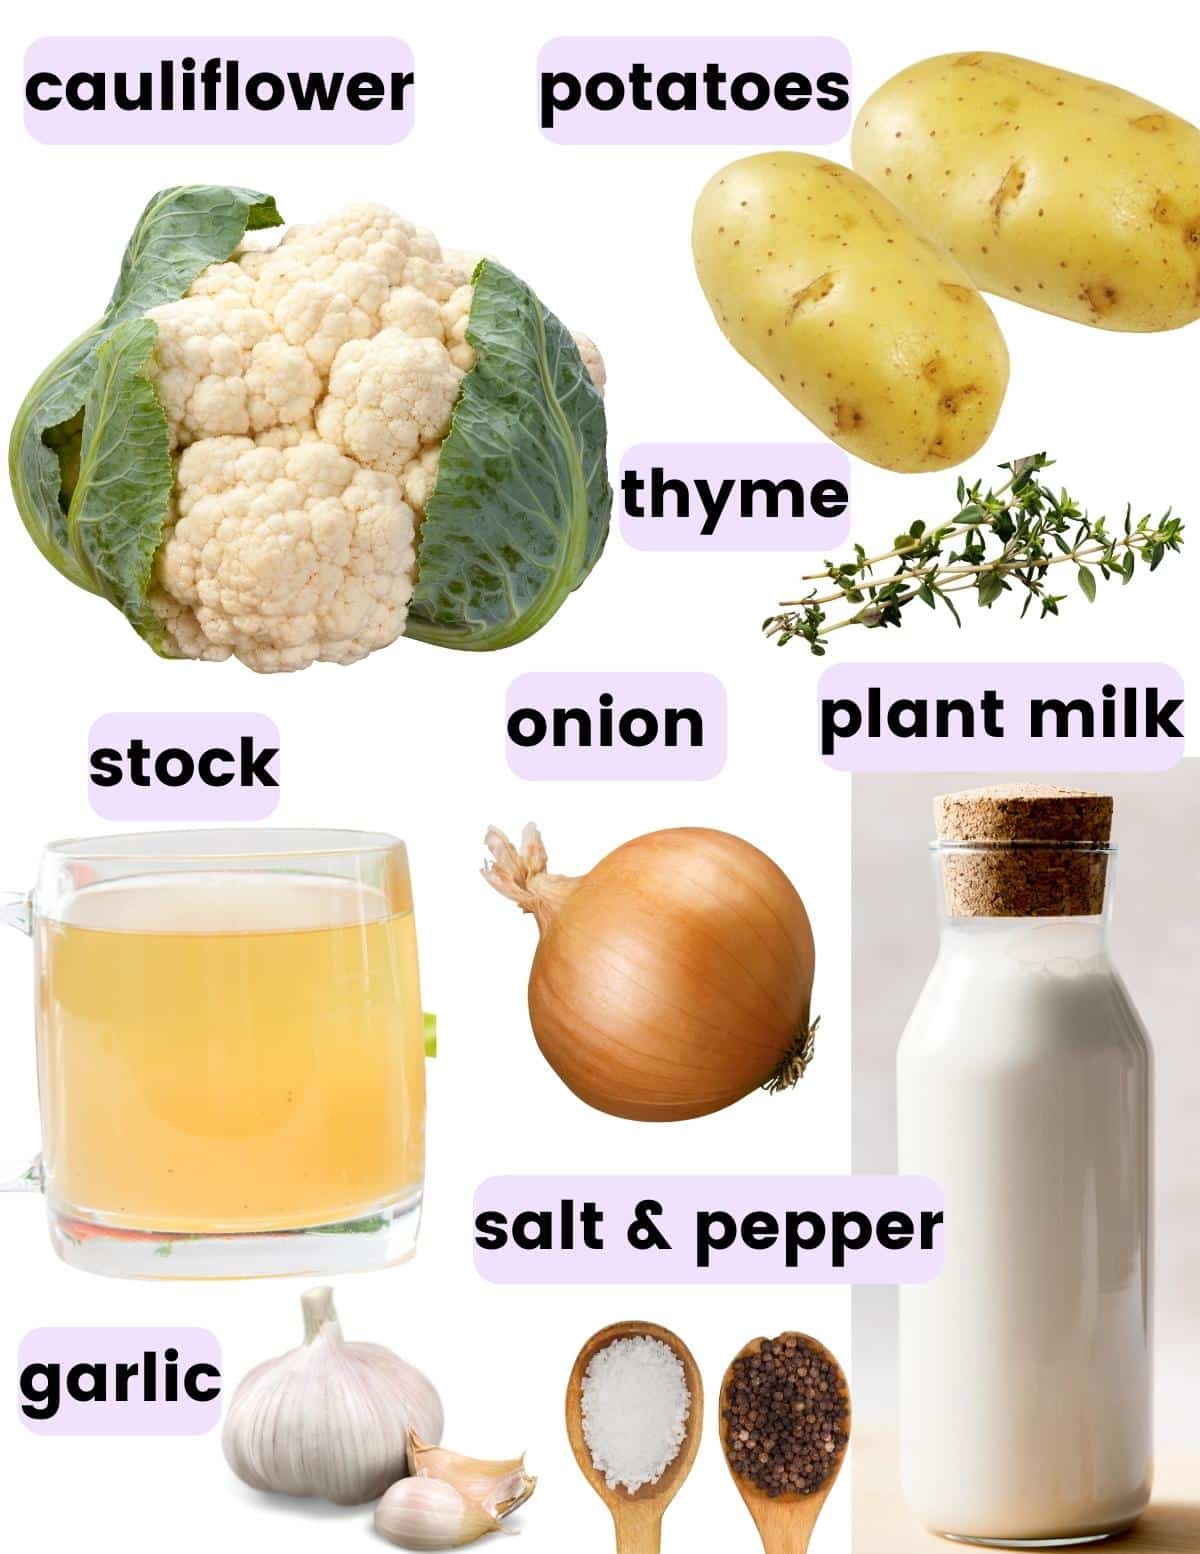 cauliflower, potatoes, thyme, stock, onion, plant milk, garlic, salt, and pepper